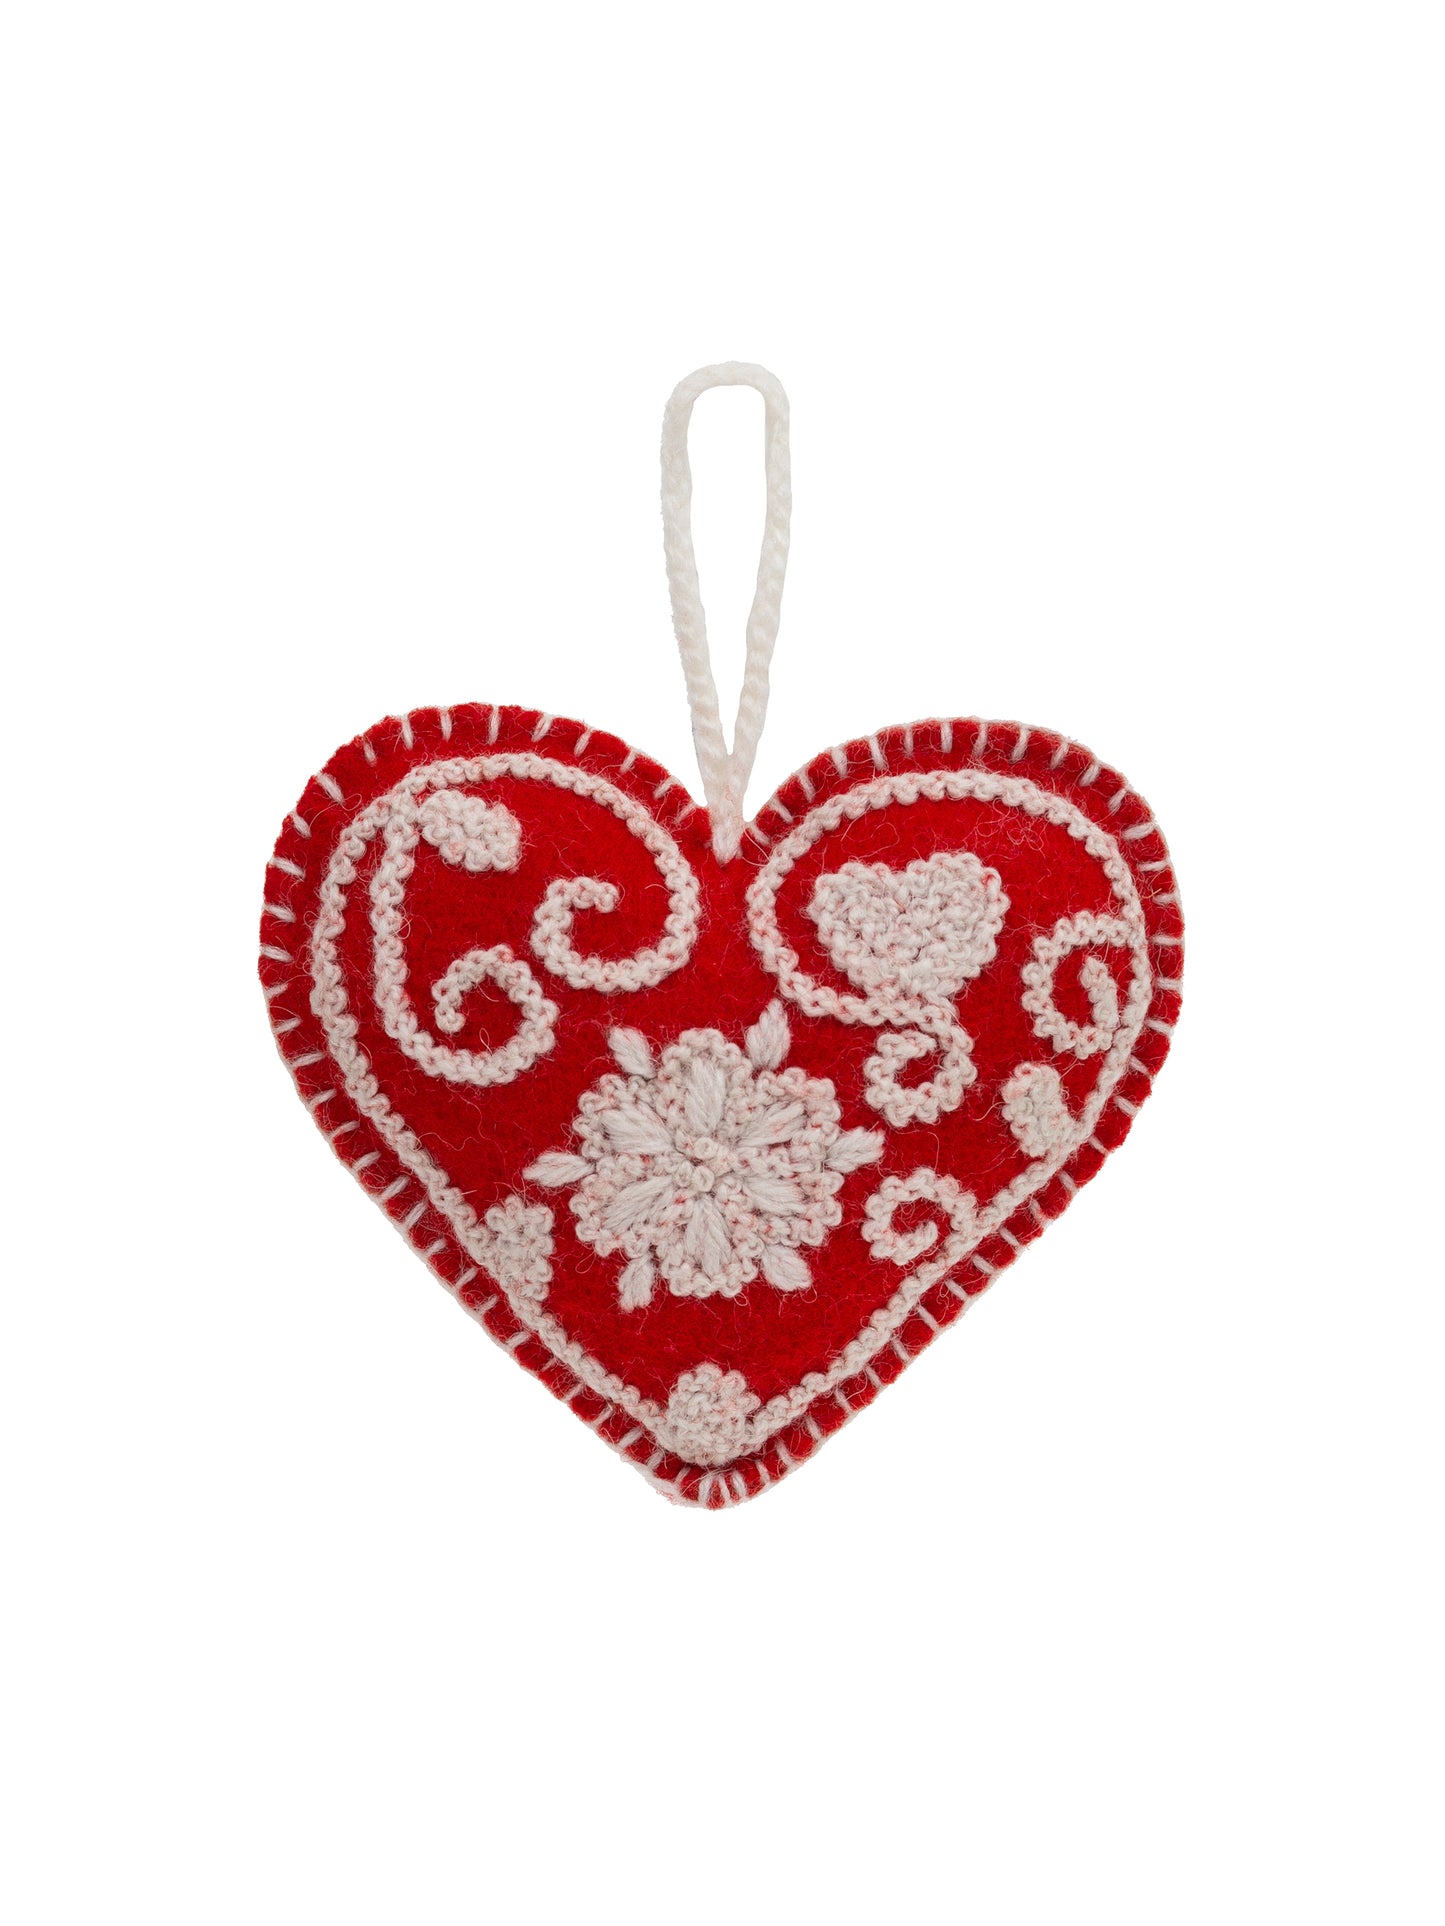  Heart Wool Felt Ornaments Red Weston Table